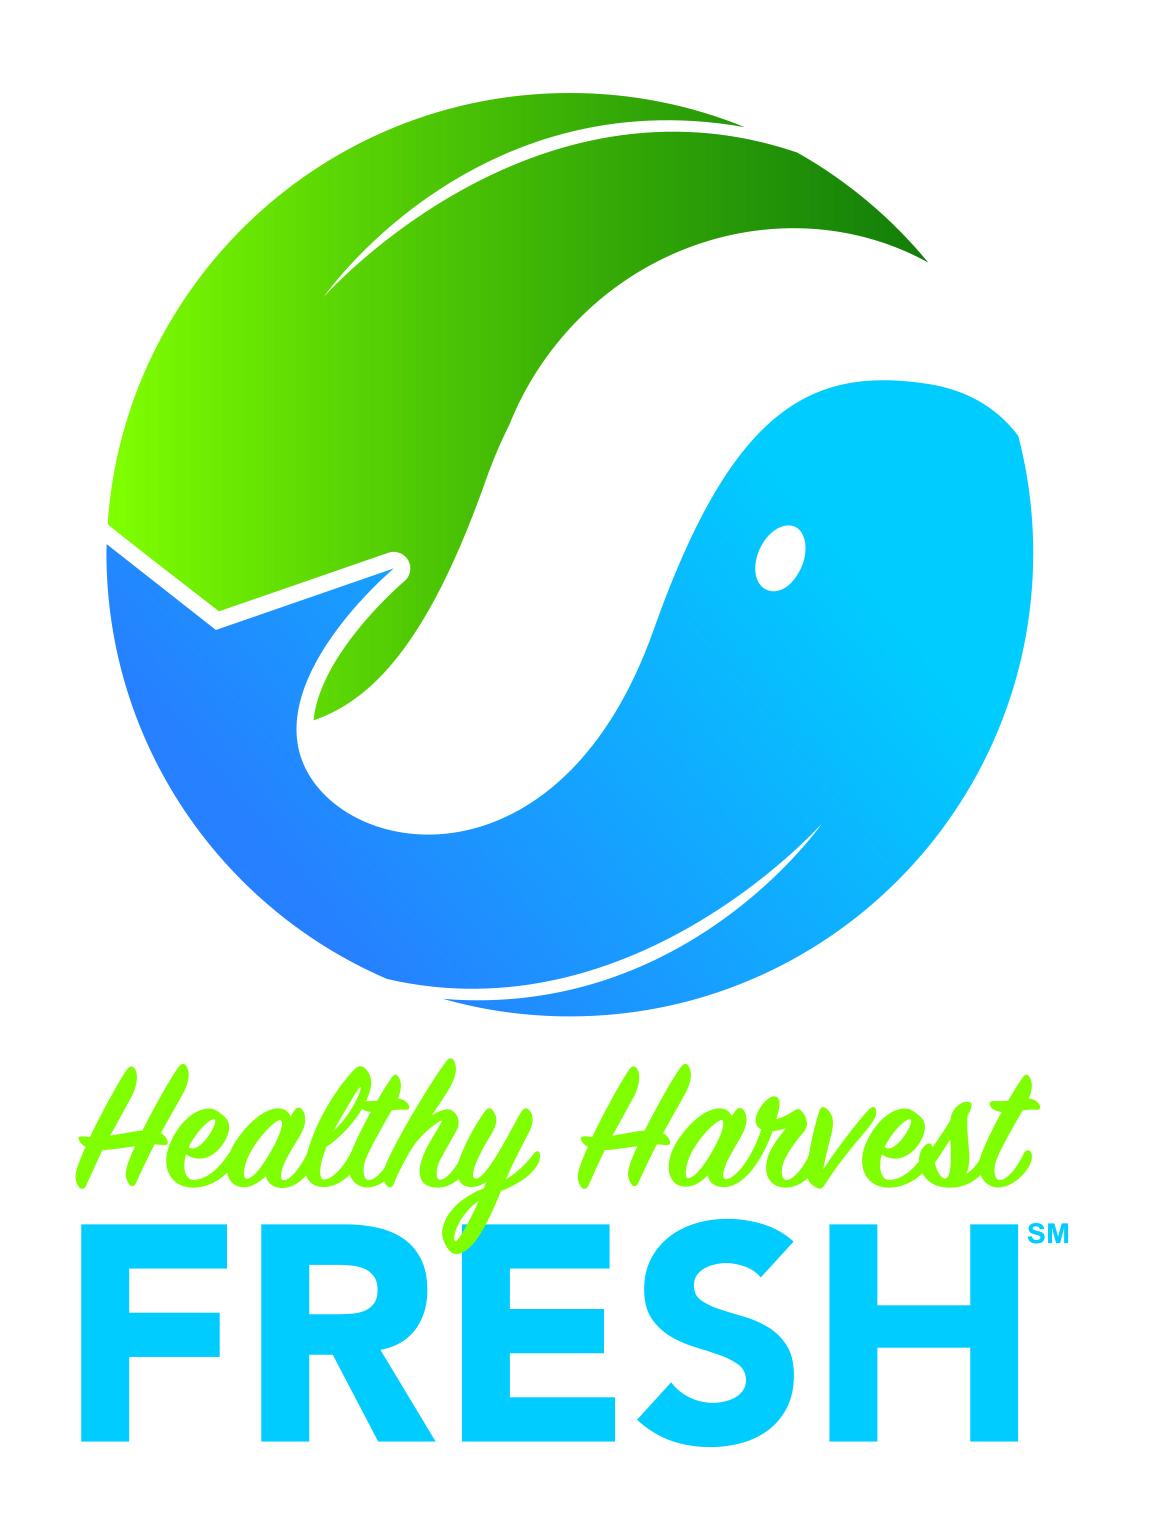 Healthy Harvest Fresh Healthy Harvest Food Bank